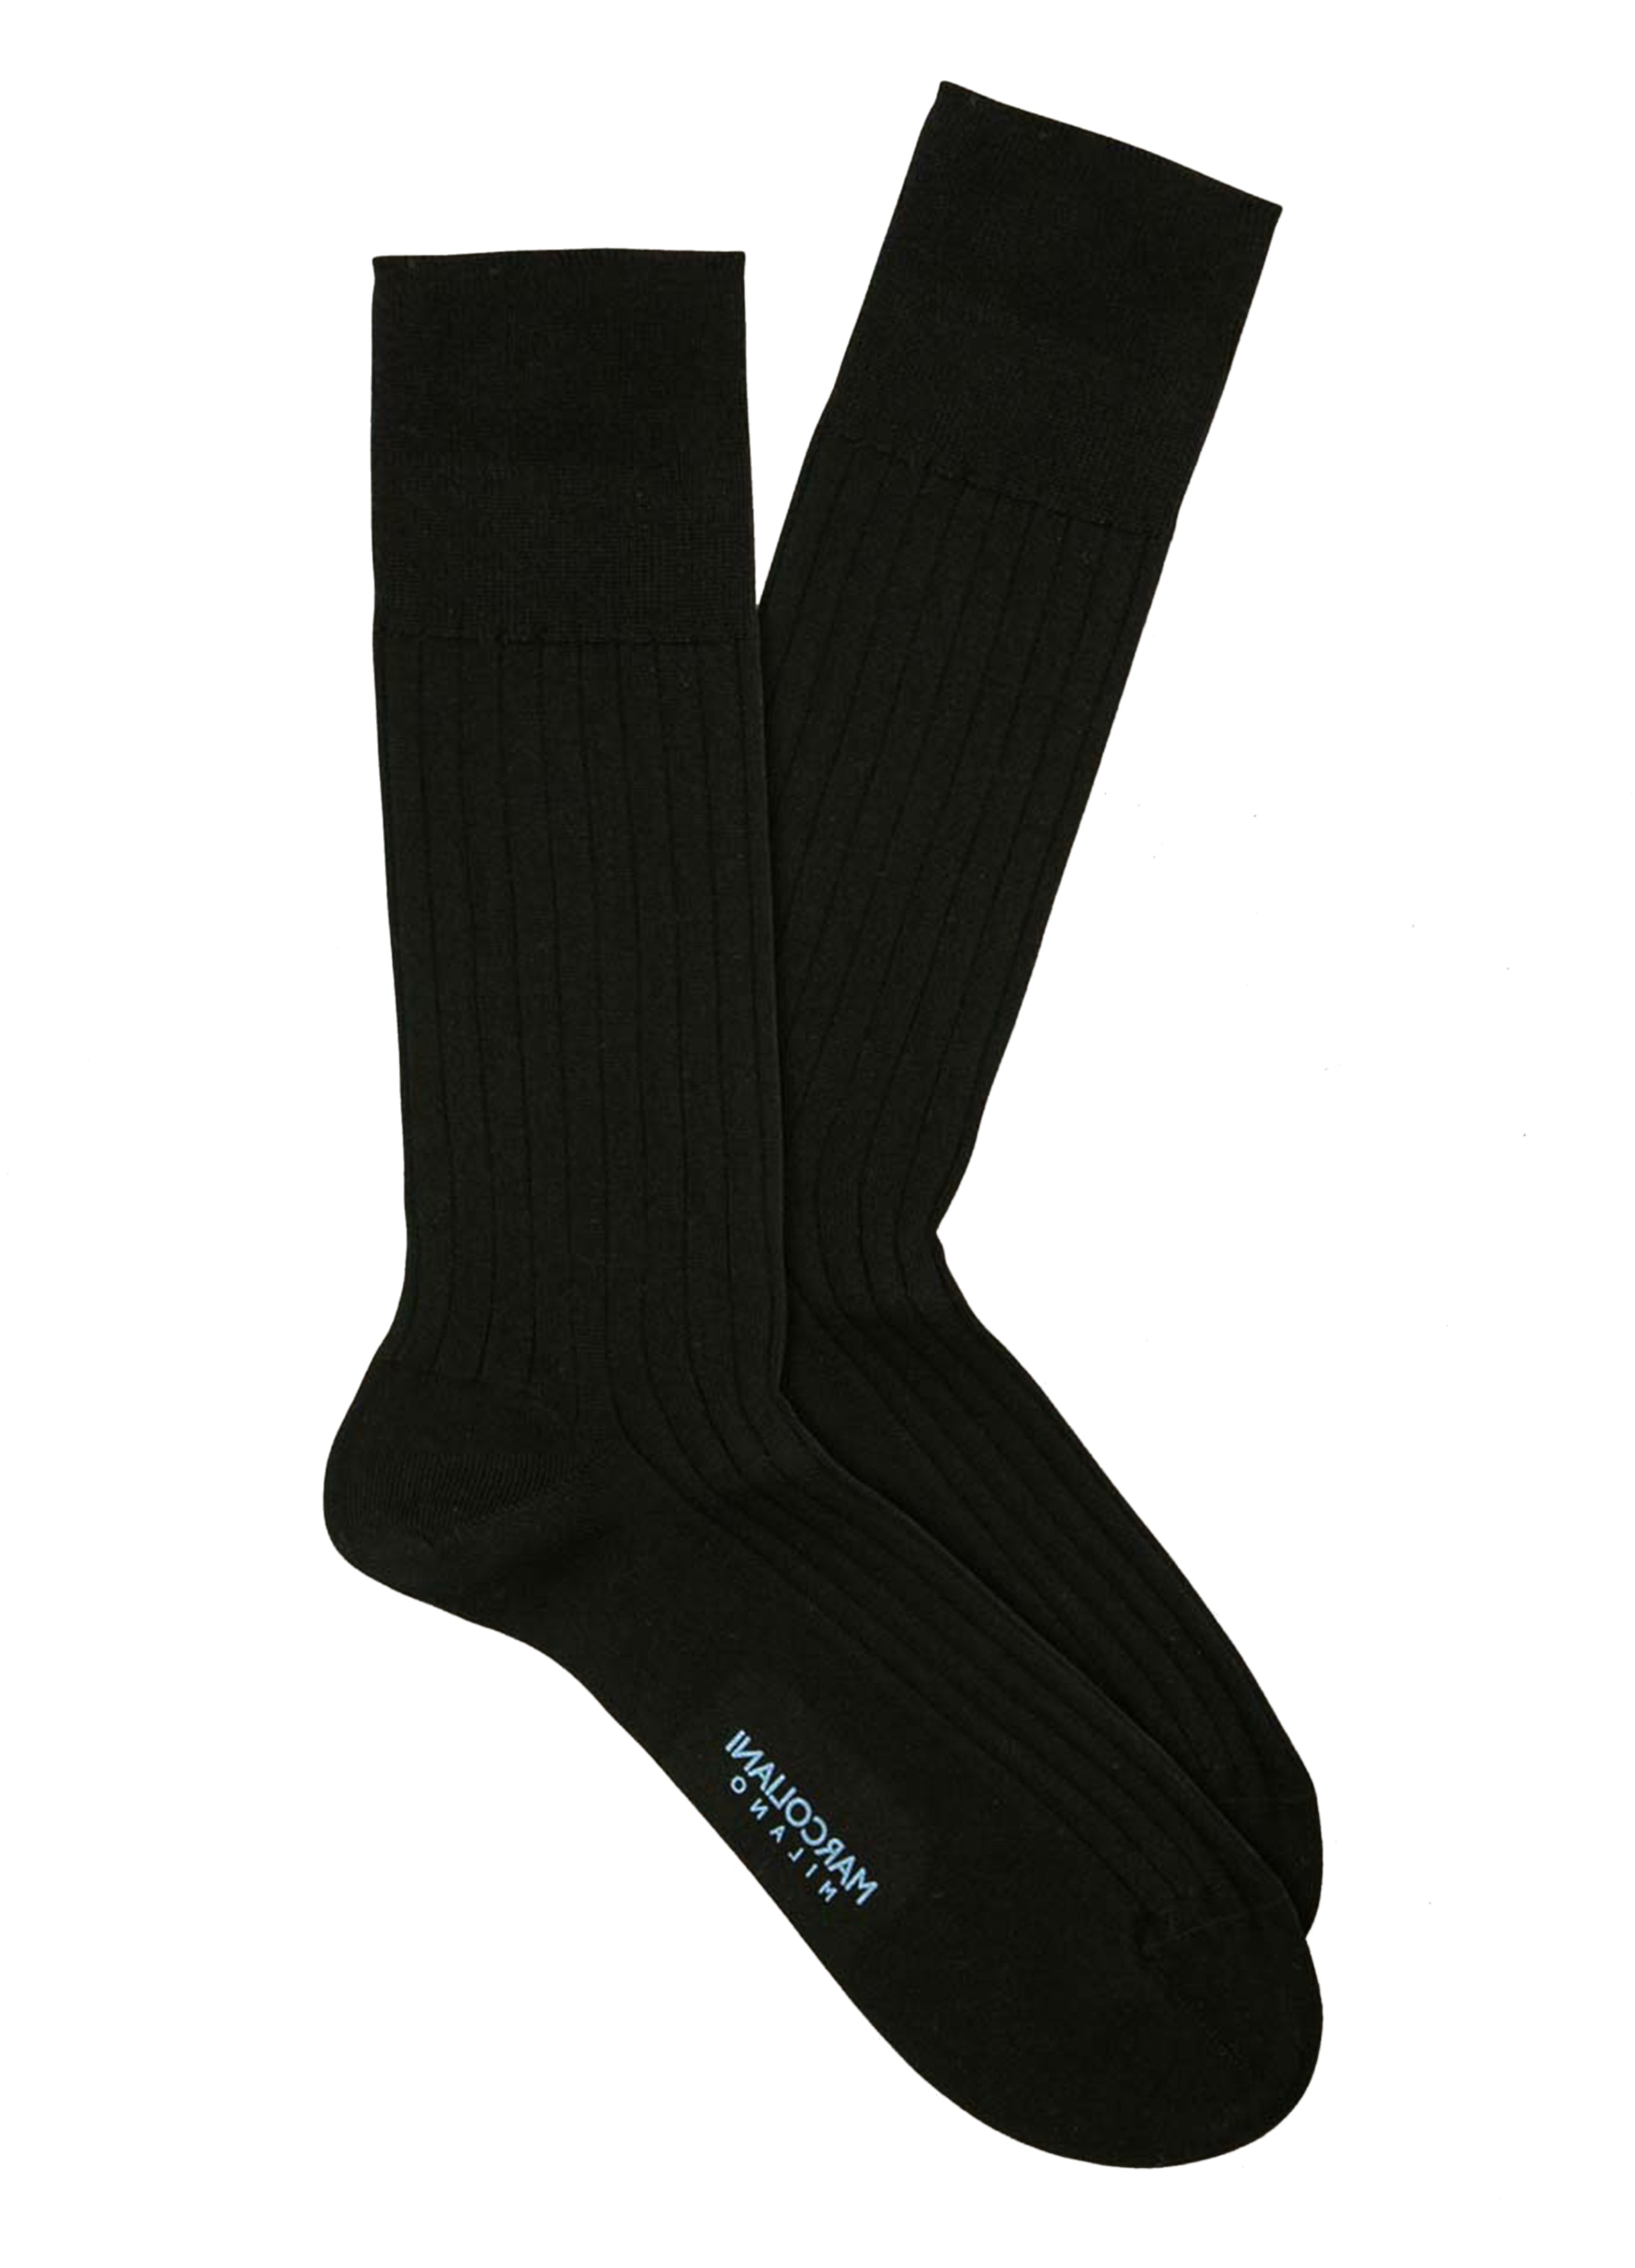 Marcoliani Black Mid Calf Cotton Dress Socks - Large Size